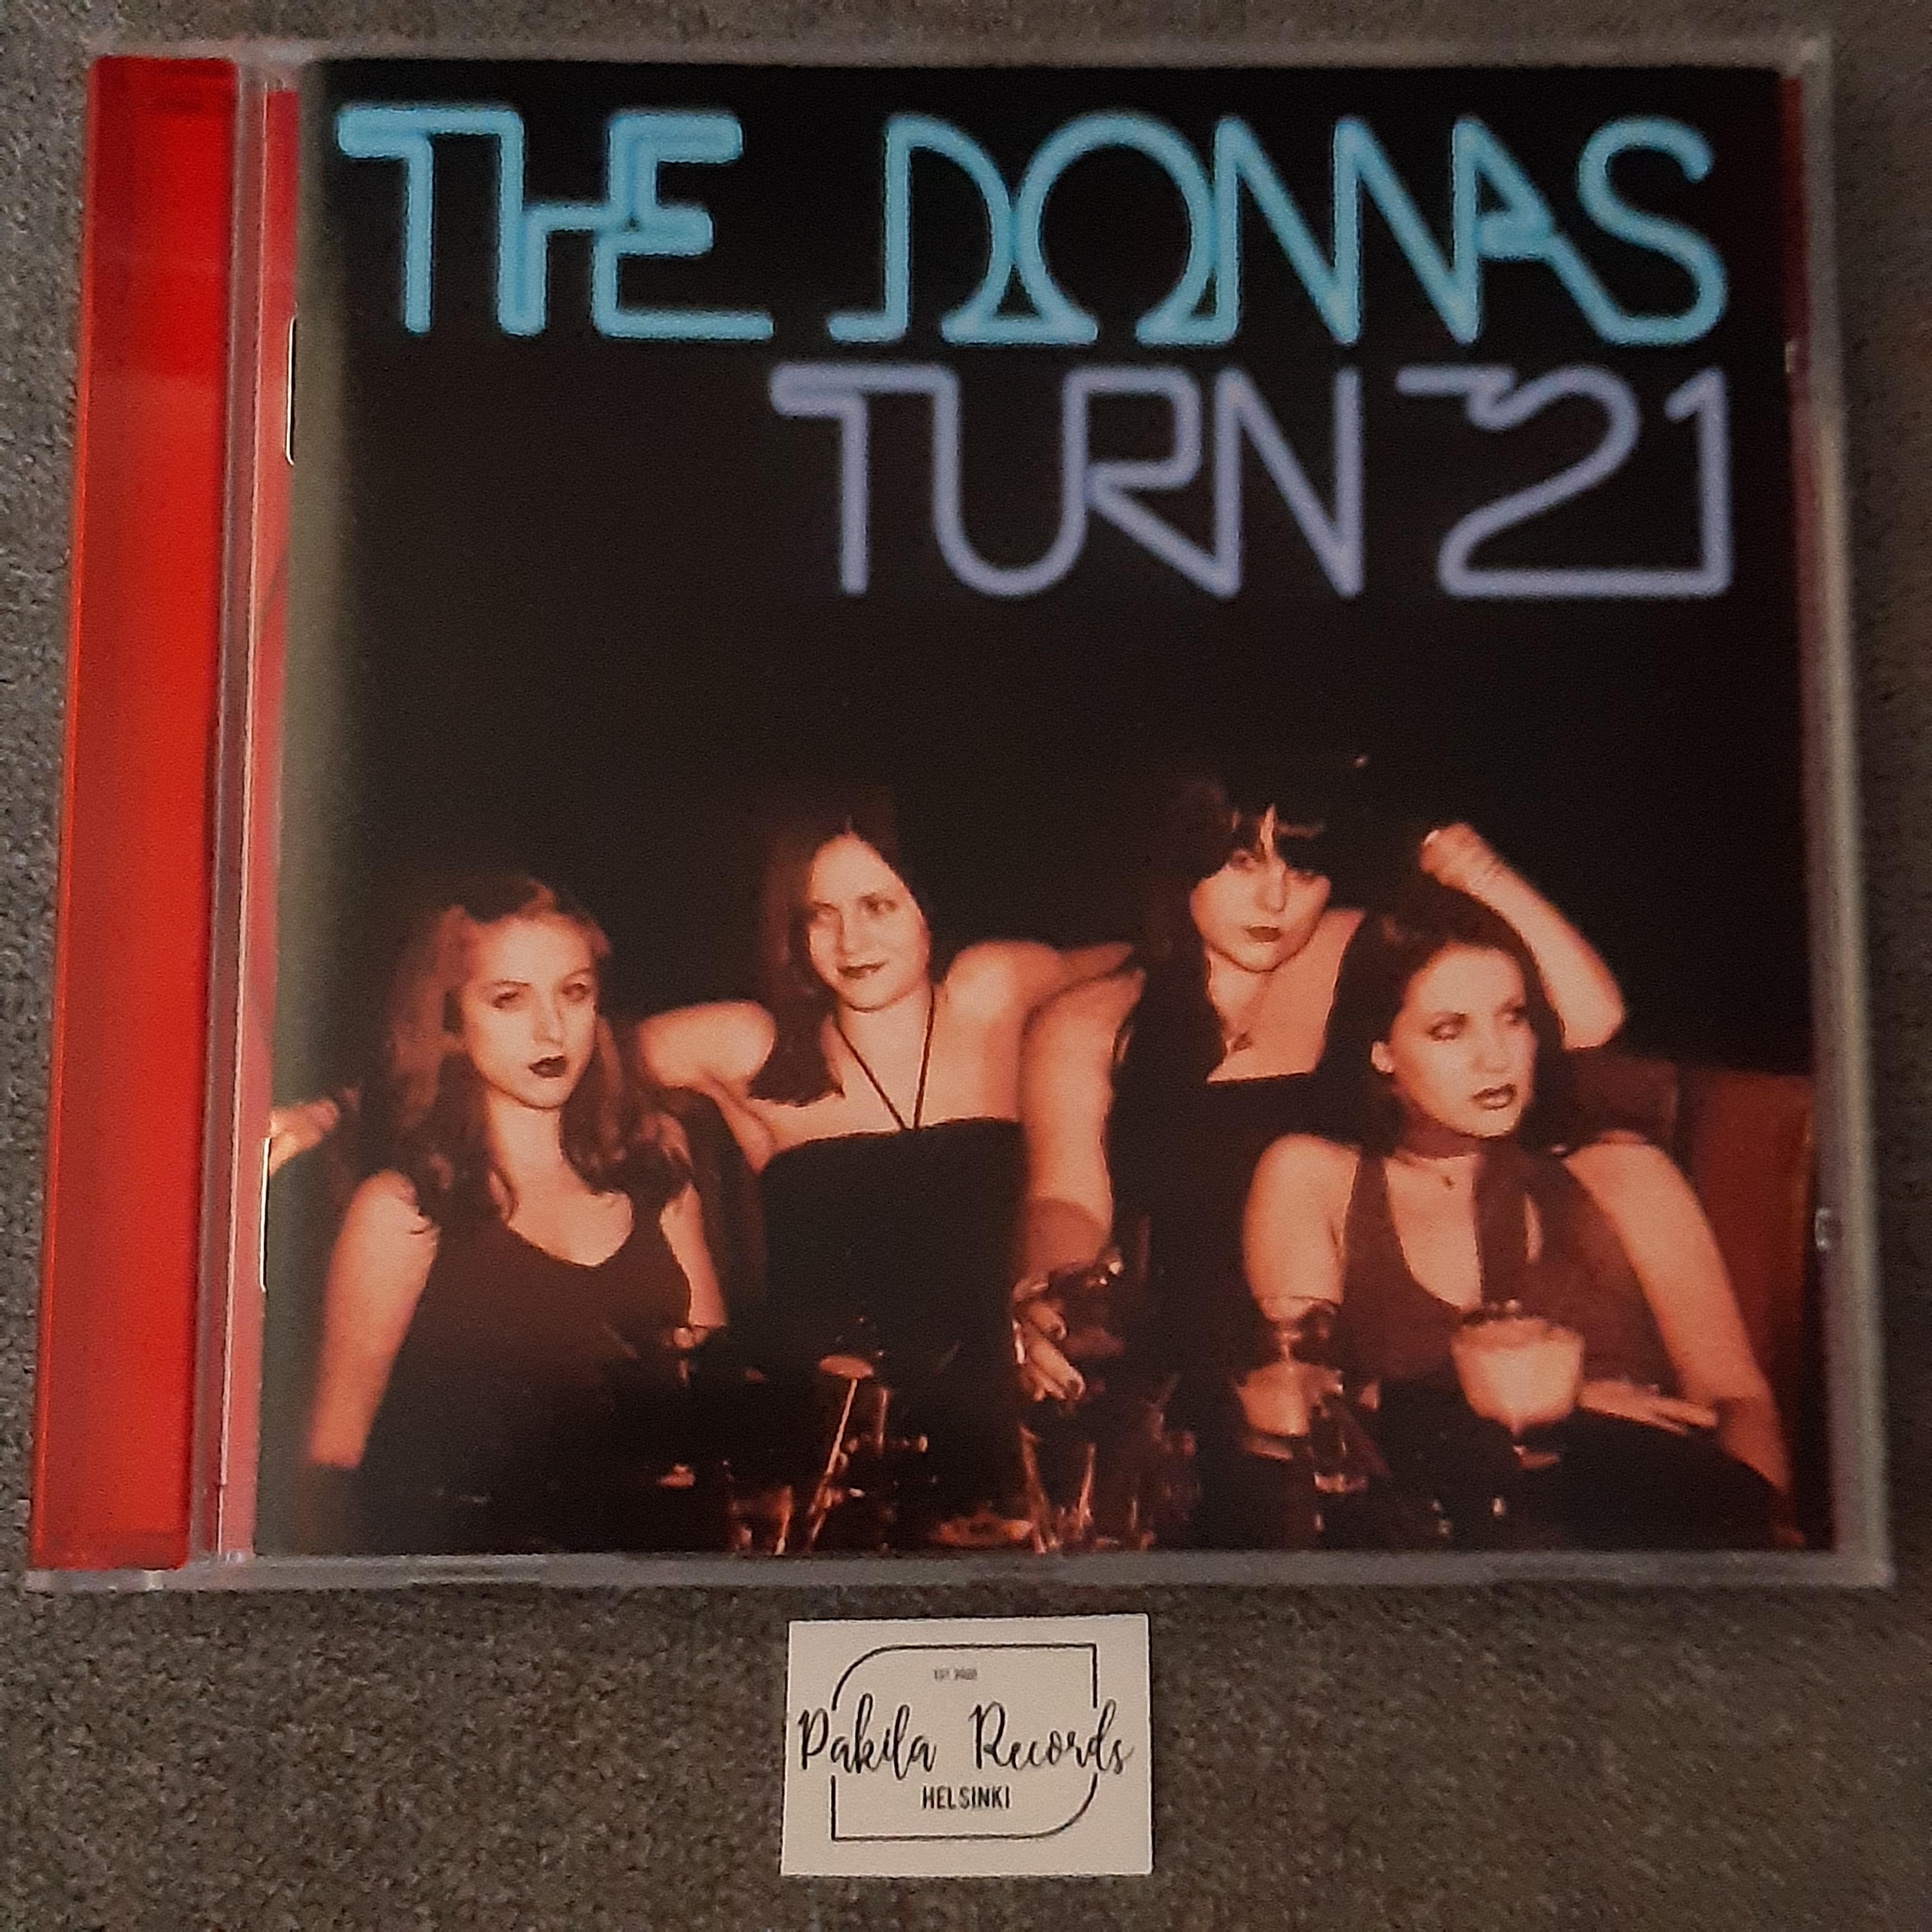 The Donnas - Turn 21 - CD (käytetty)